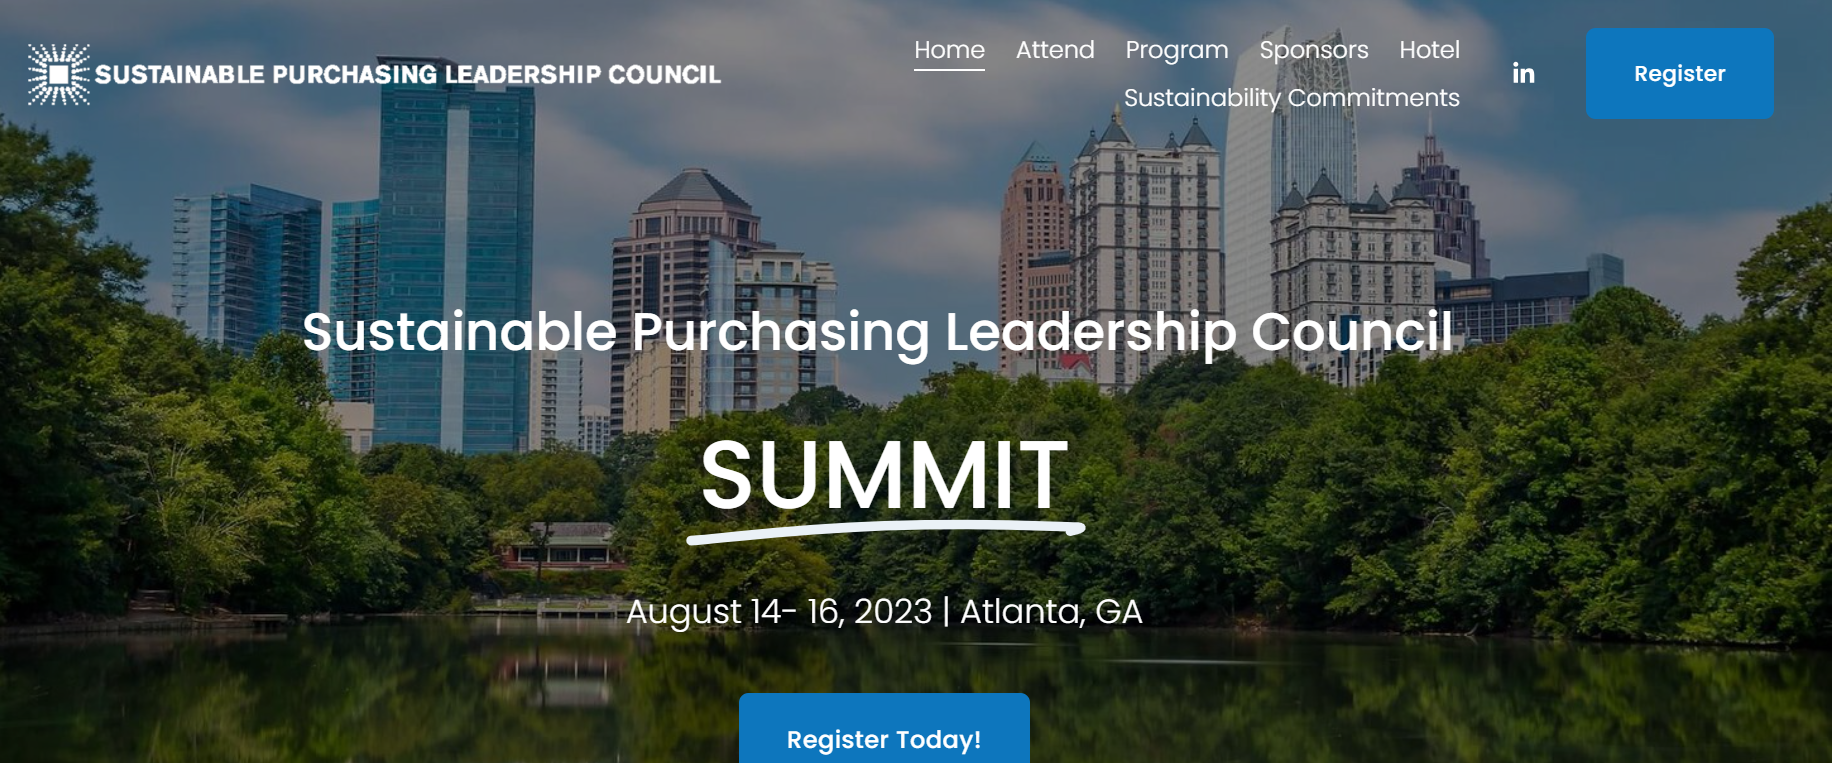 SPLC Summit in Atlanta, Georgia 14th to 16th August 2023